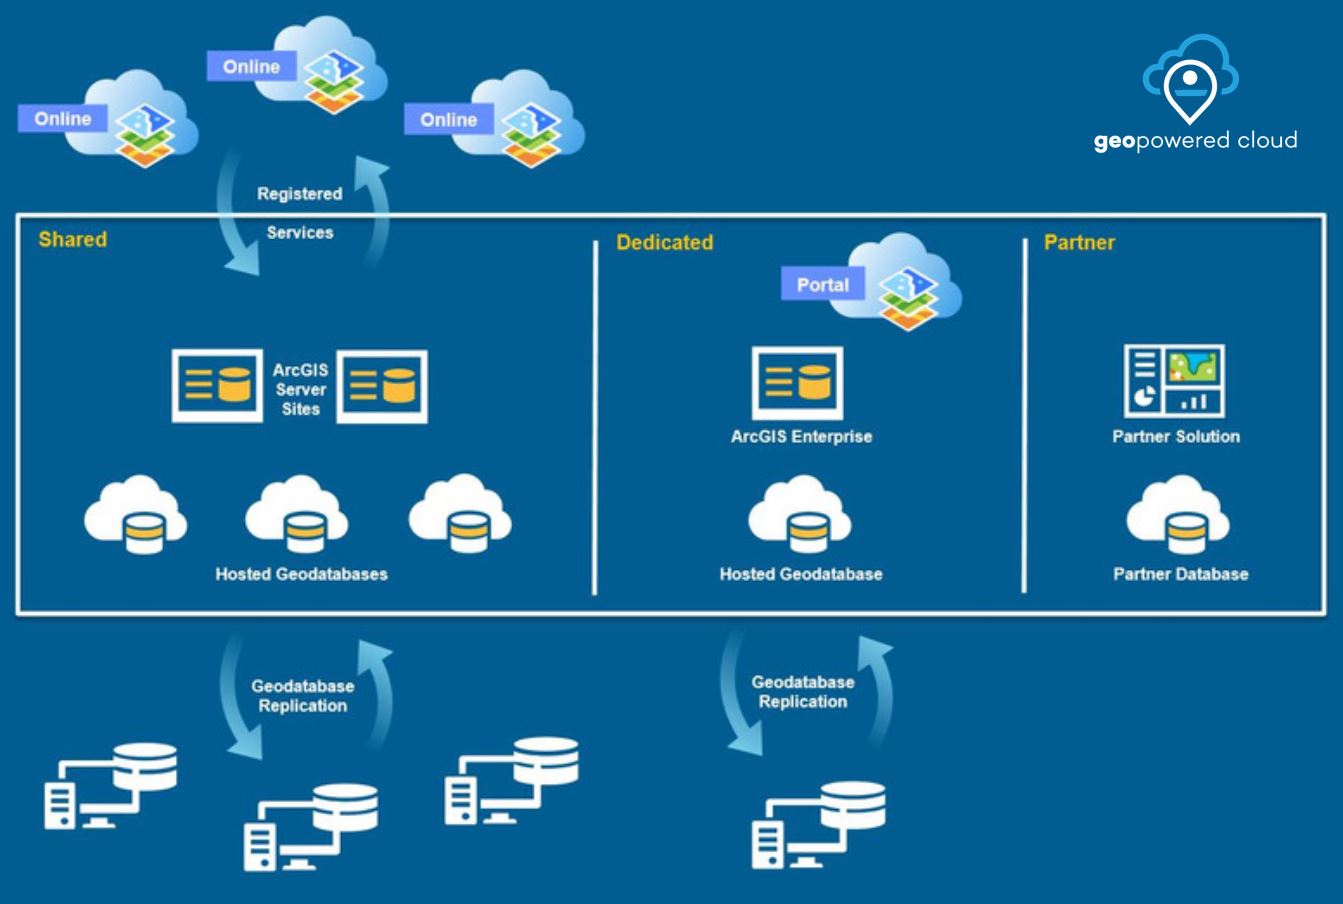 Vision of The GEOPowered Cloud - An Enterprise GIS Deployment Platform